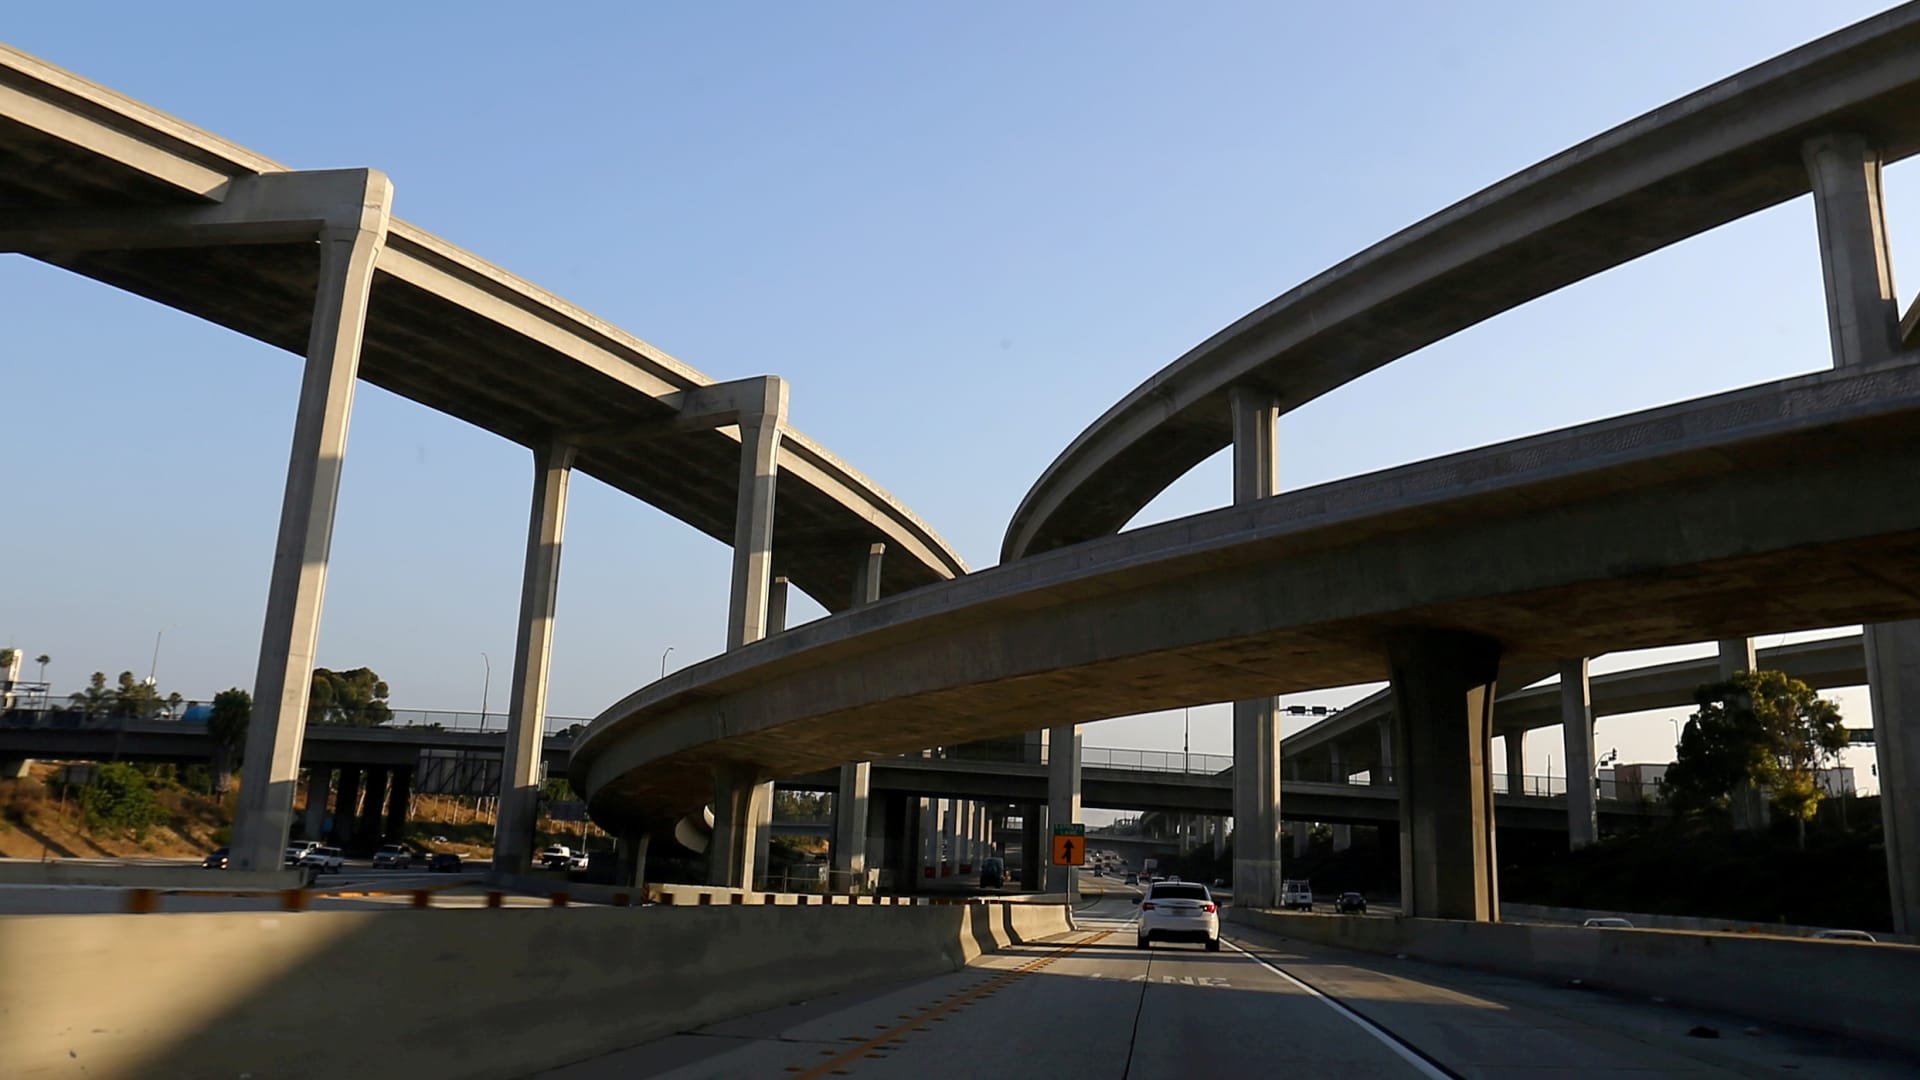 California may build solar panels alongside highways